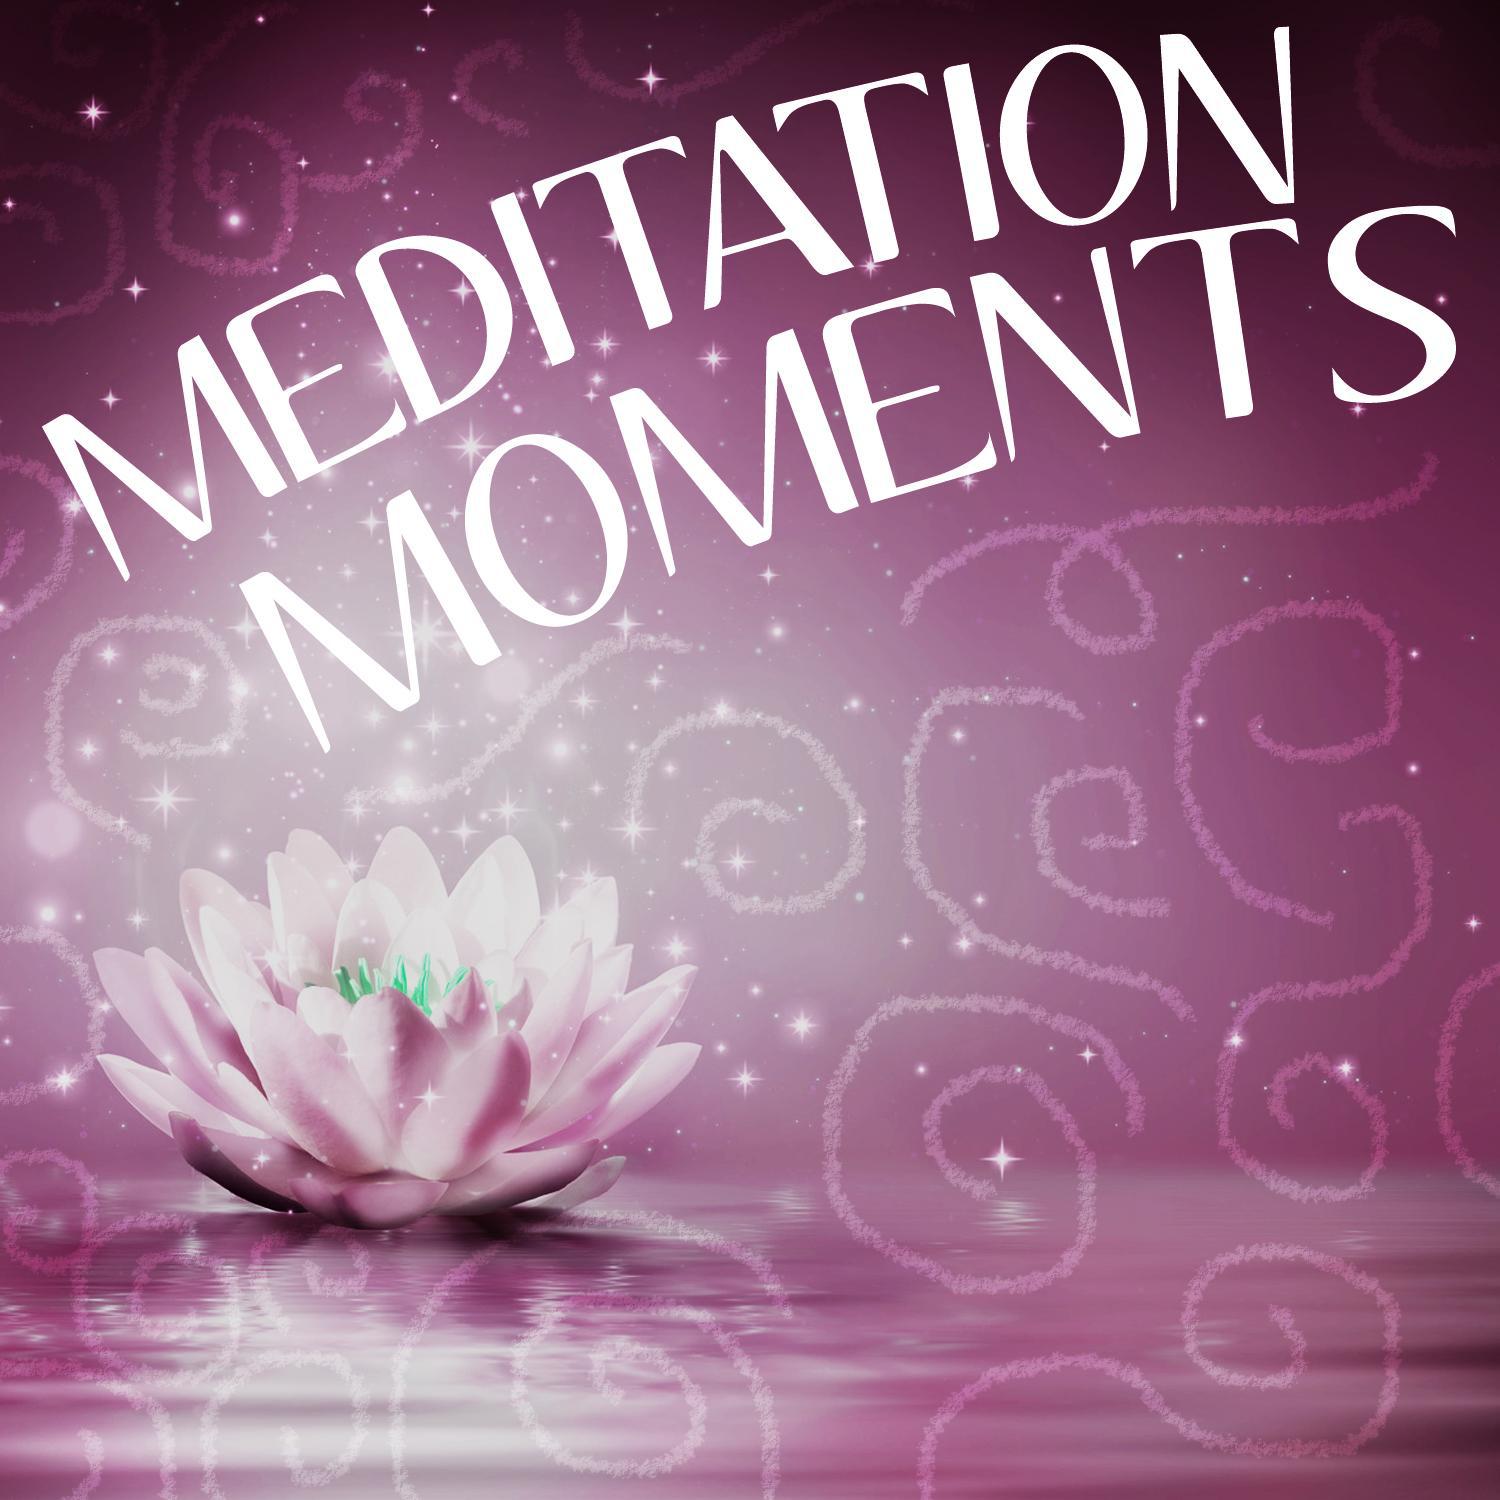 Meditation Moments